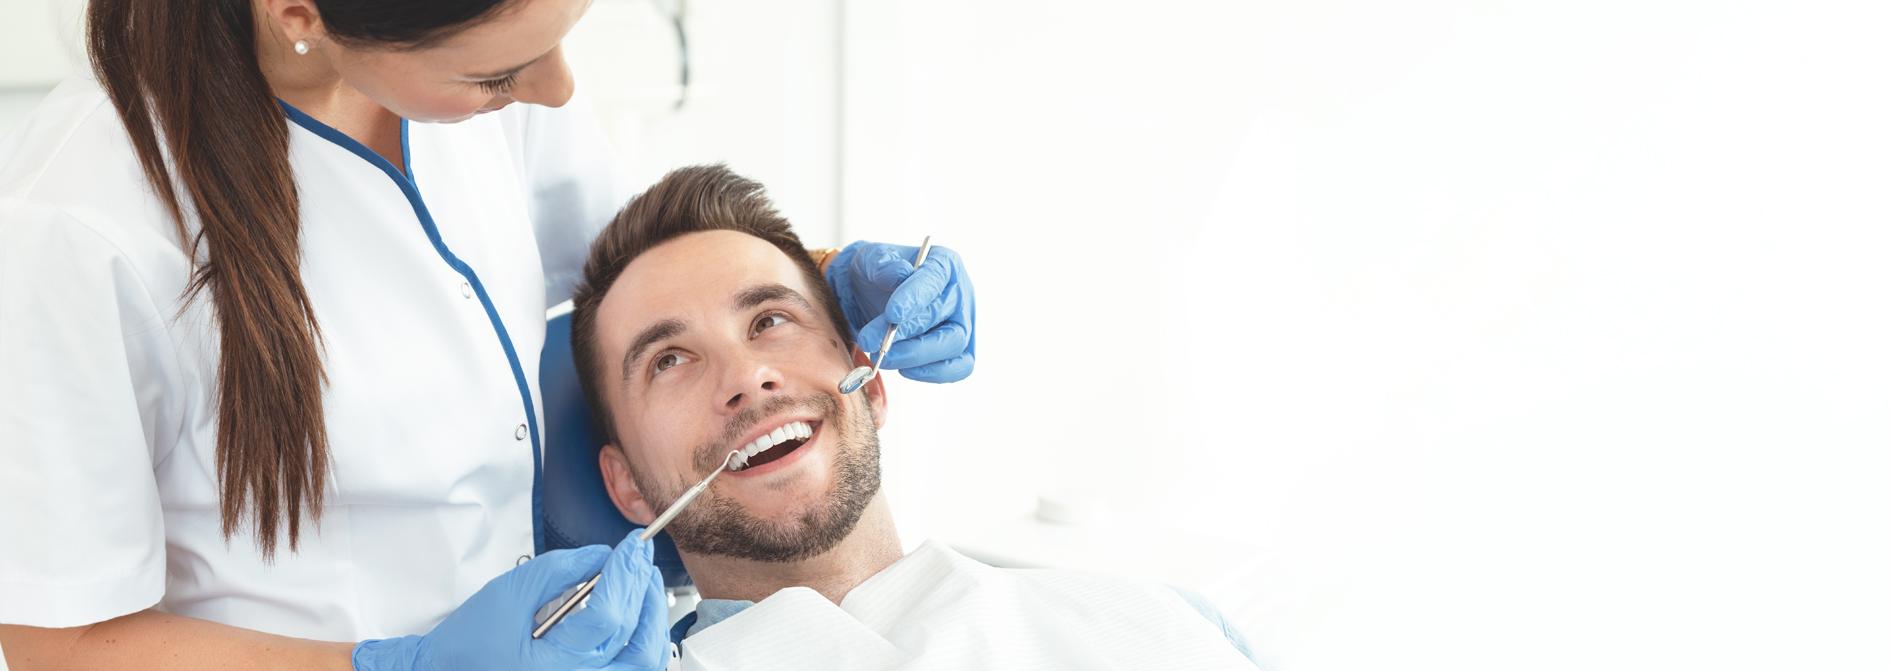 Slajd #2 Pacjent u dentysty